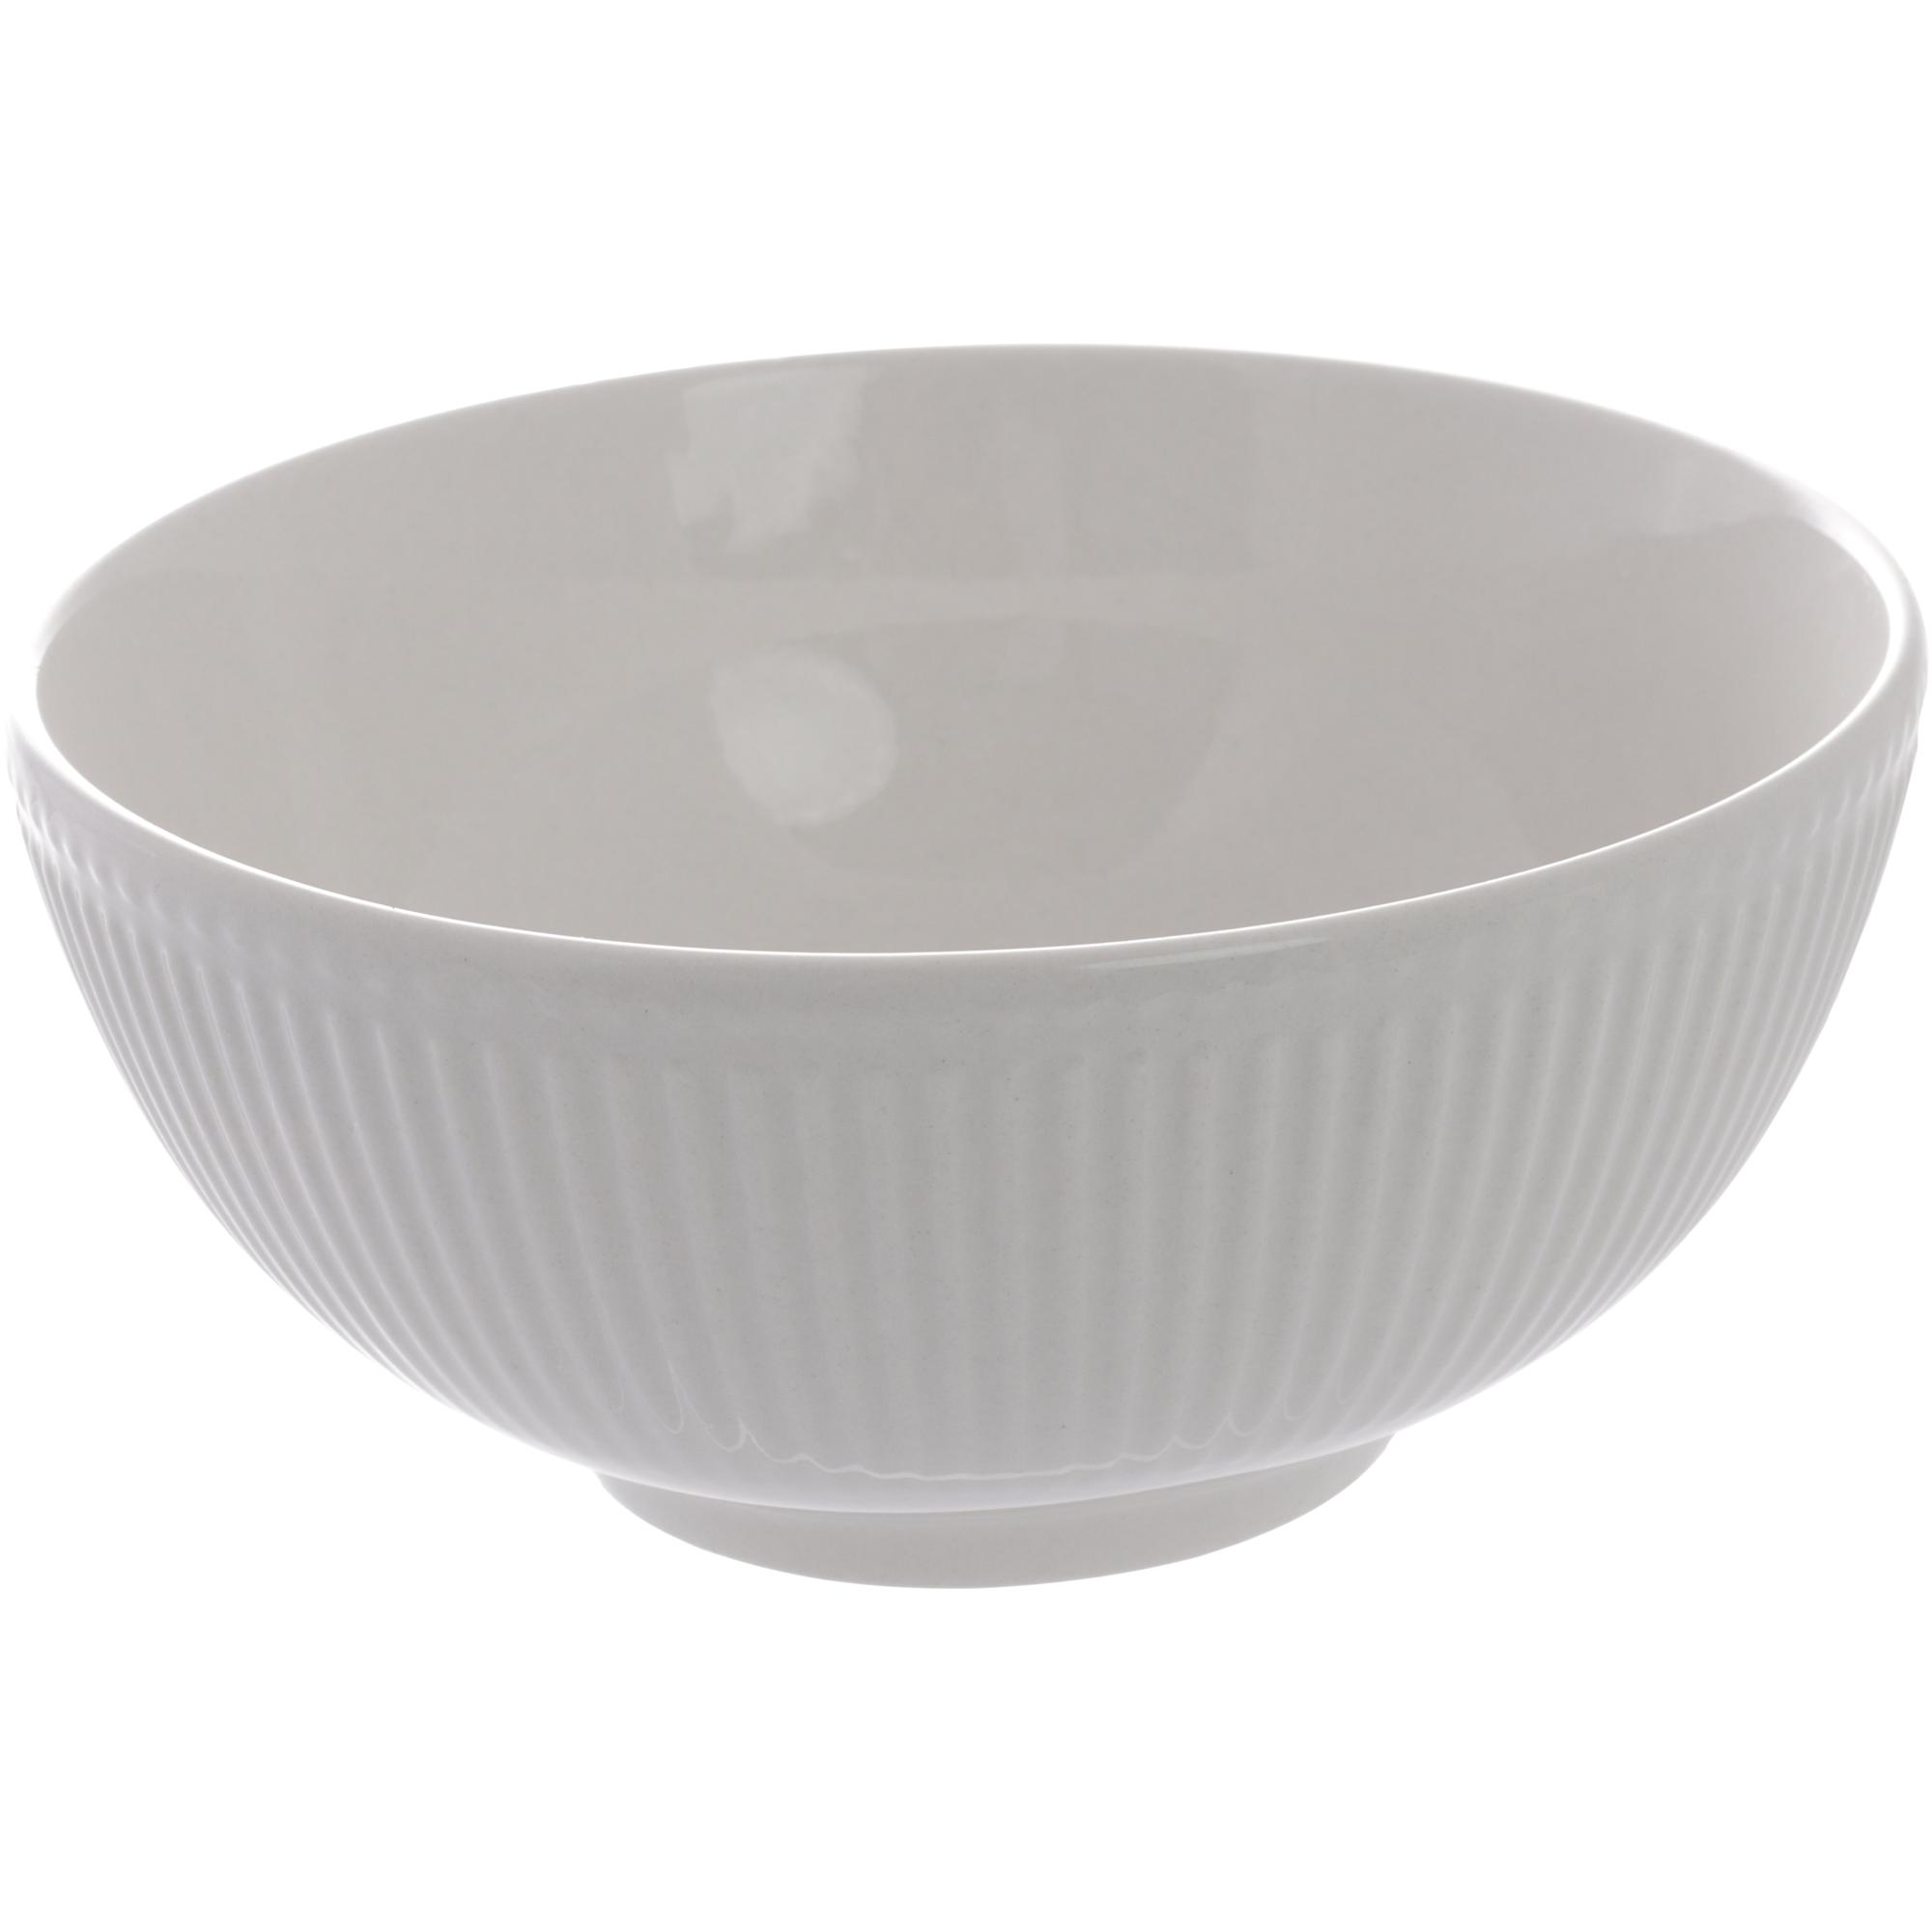 6 inch bowl 600 ml 15.4 x 7.3 x 7.3 cm - 087-900024